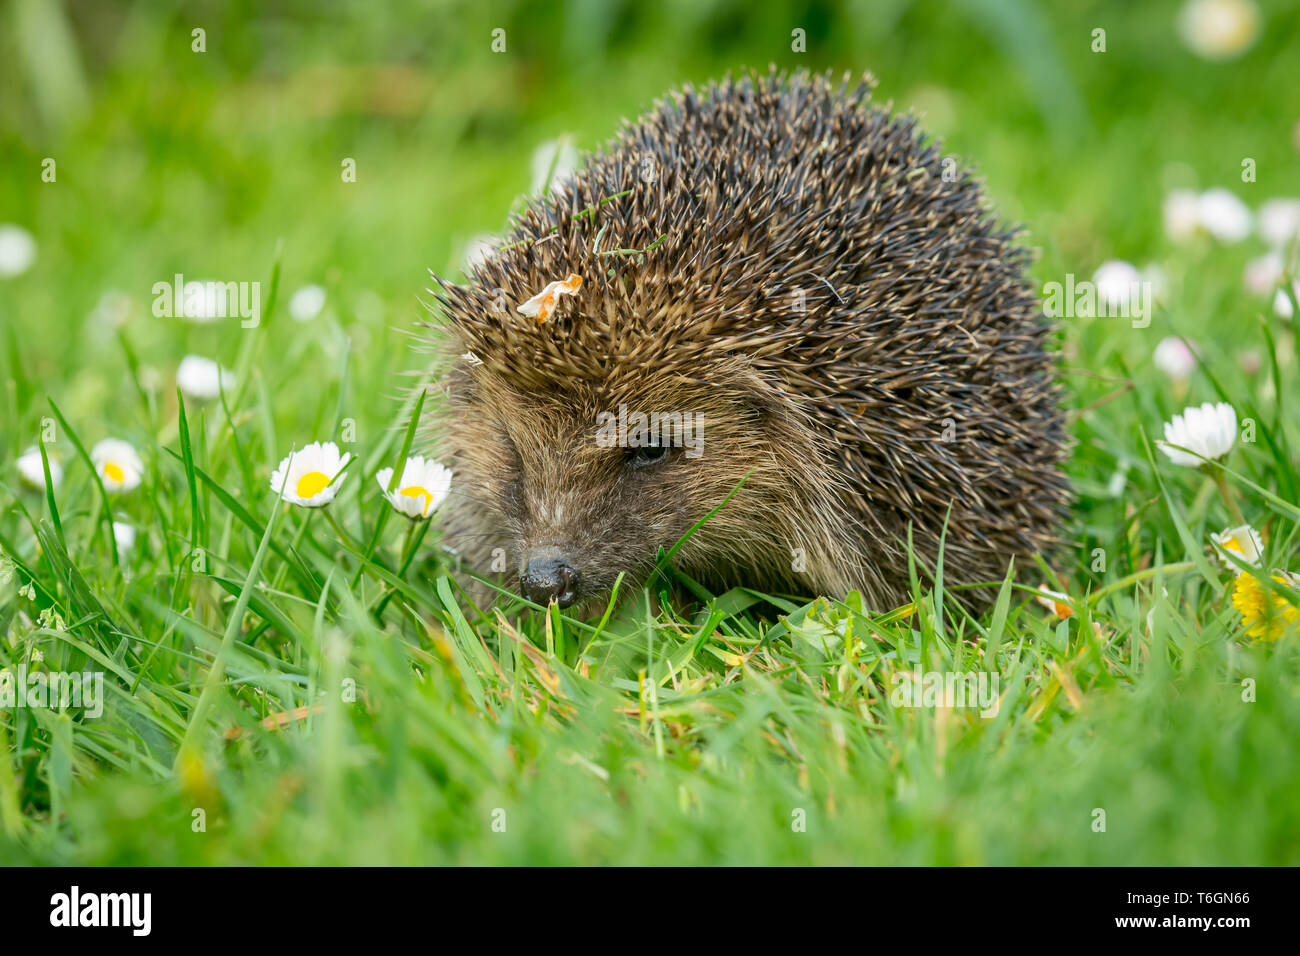 Riccio, (nome scientifico: Erinaceus europaeus) selvatica, nativo,hedgehog europea nel giardino naturale habitat sul verde prato in primavera. Paesaggio Foto Stock